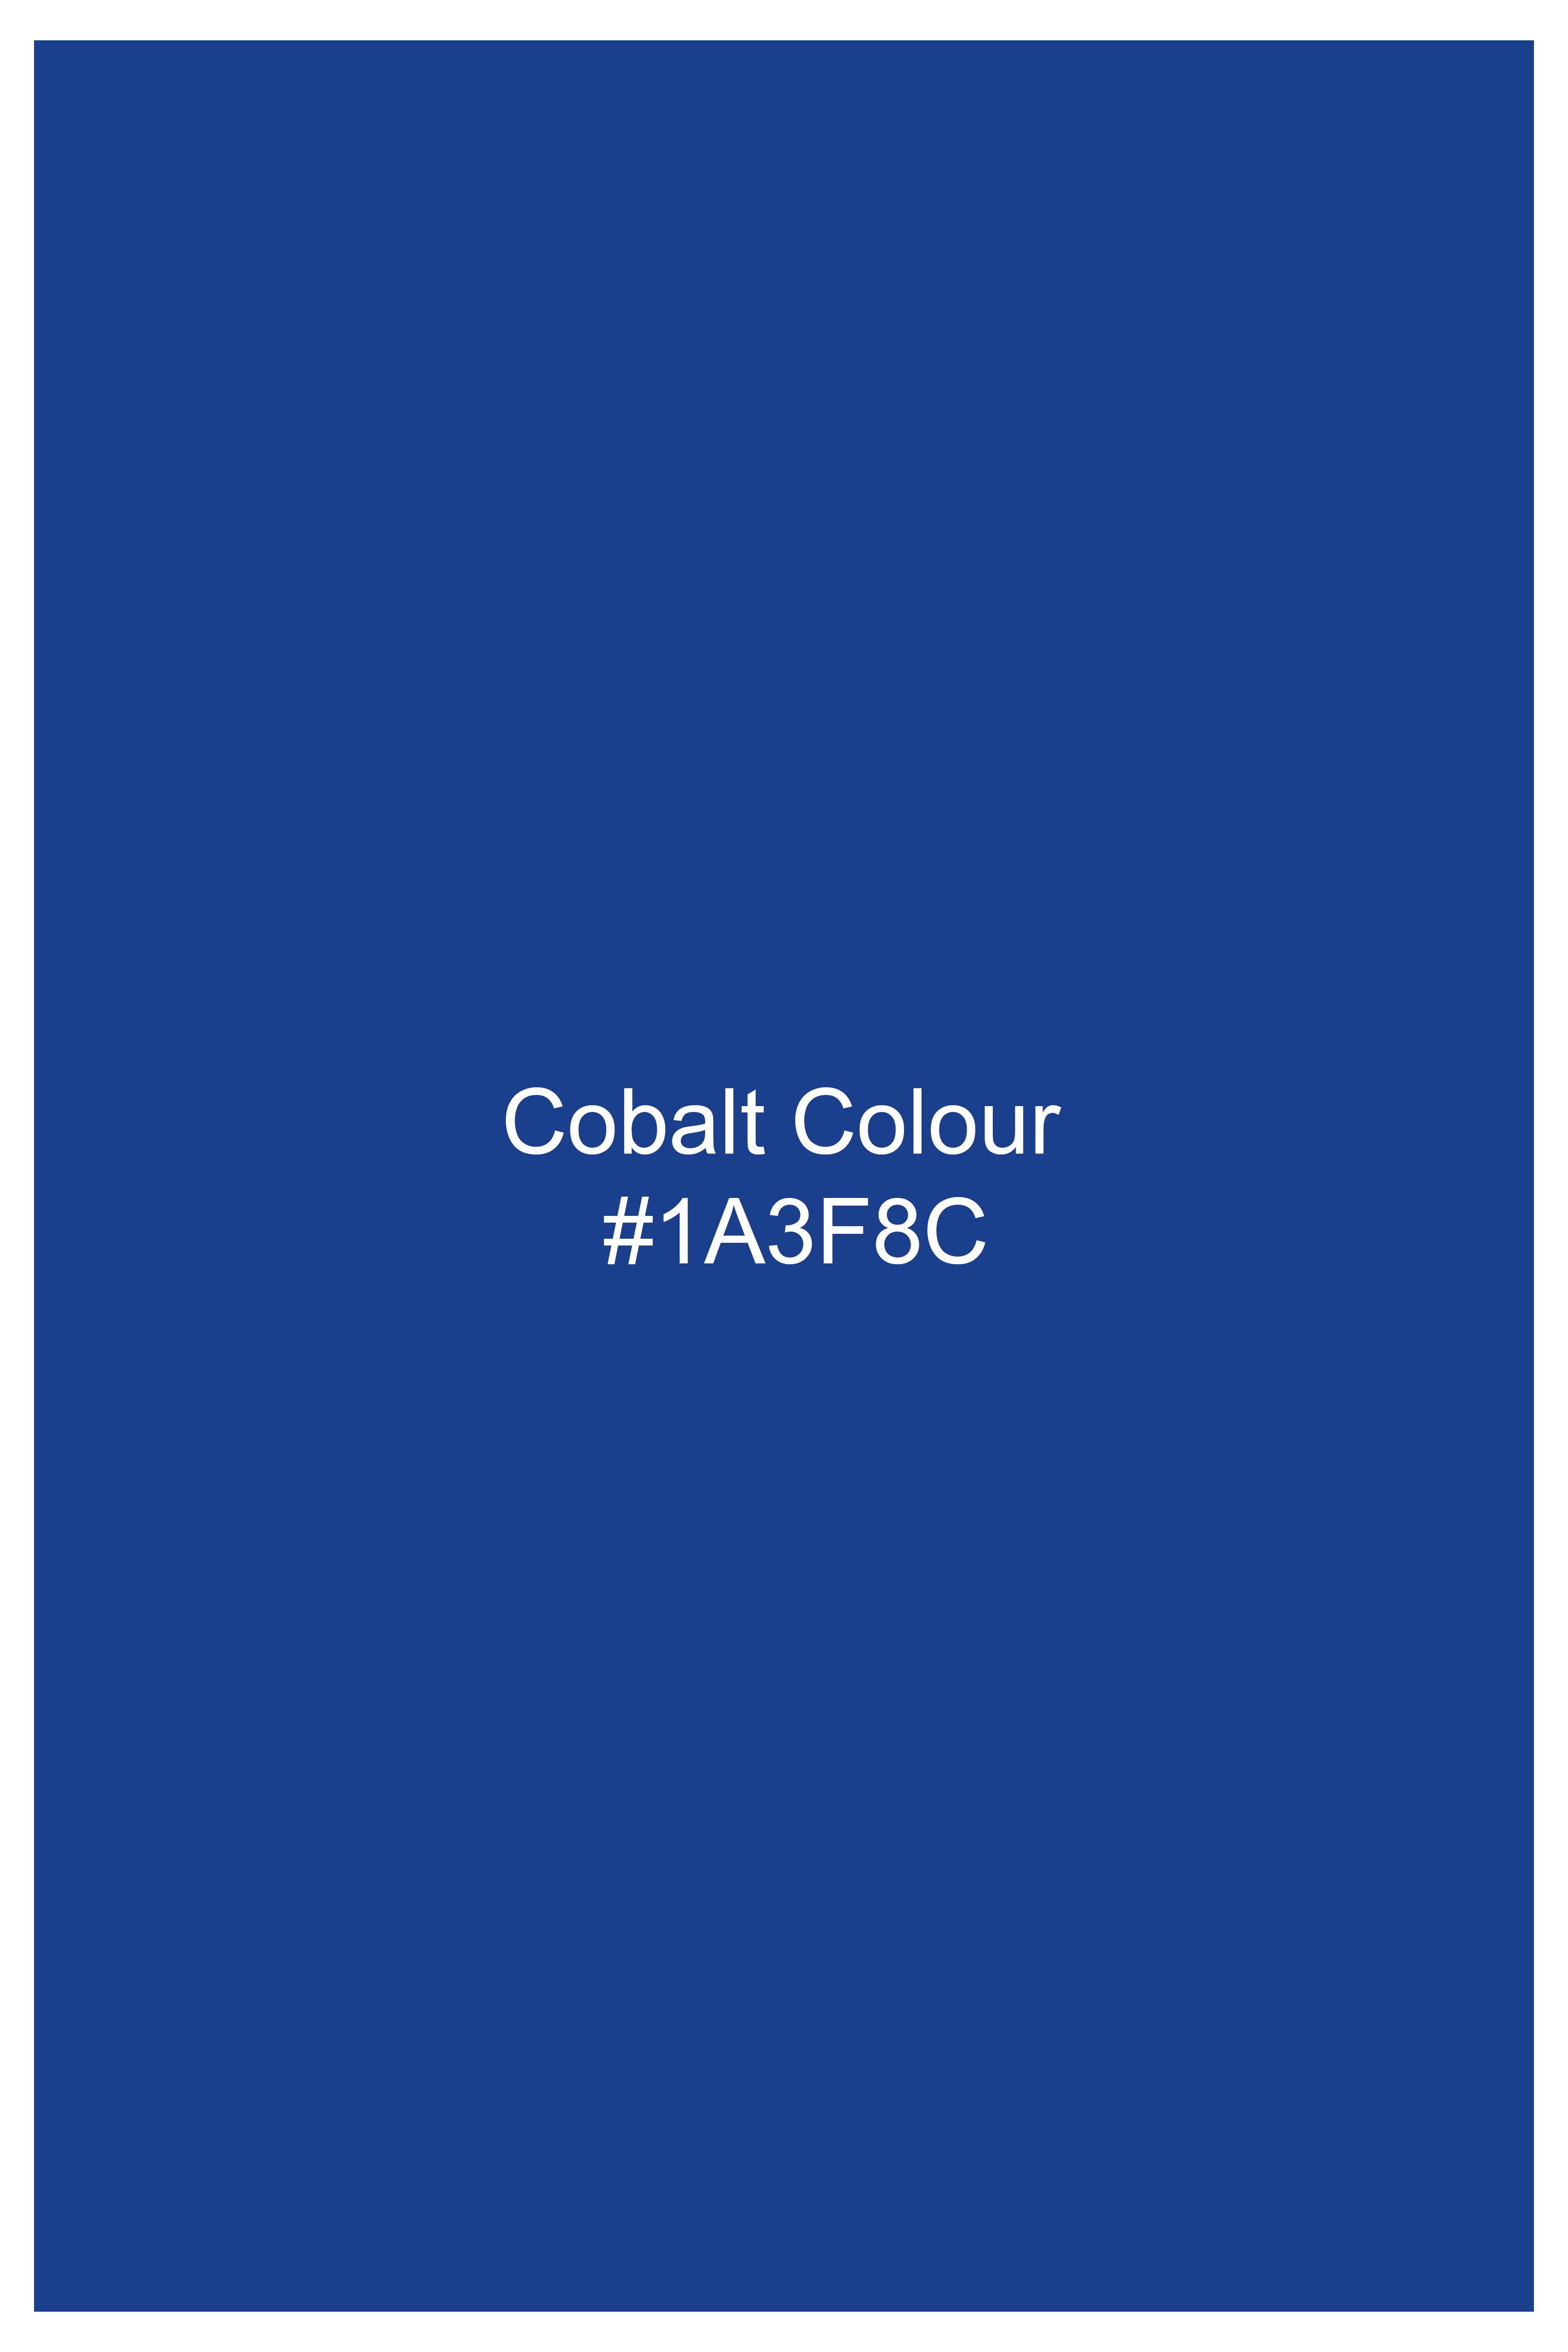 Cobalt Blue Textured Corduroy Premium Cotton Designer Tuxedo Blazer